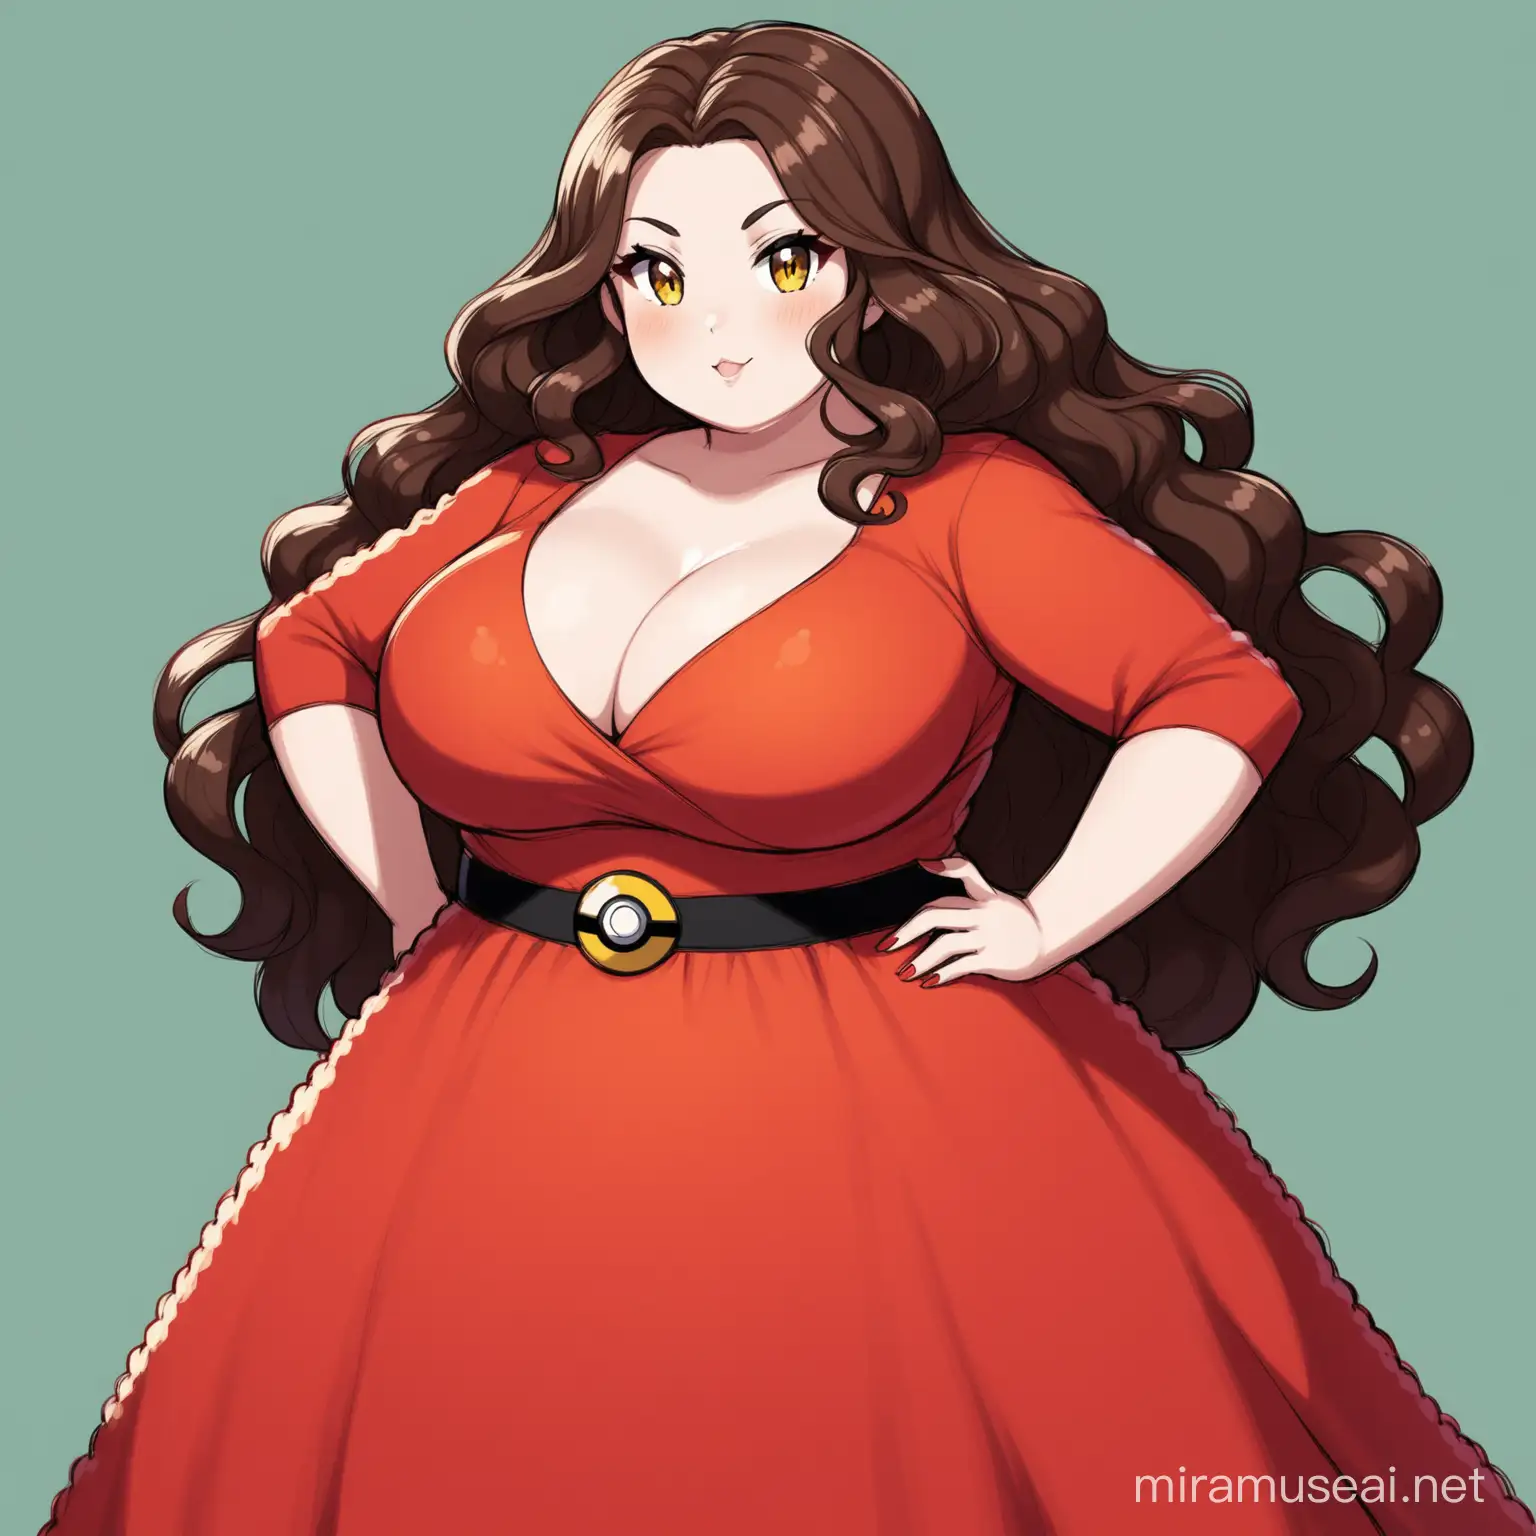 Curvy Woman with PokemonInspired Look in Elegant Red Dress